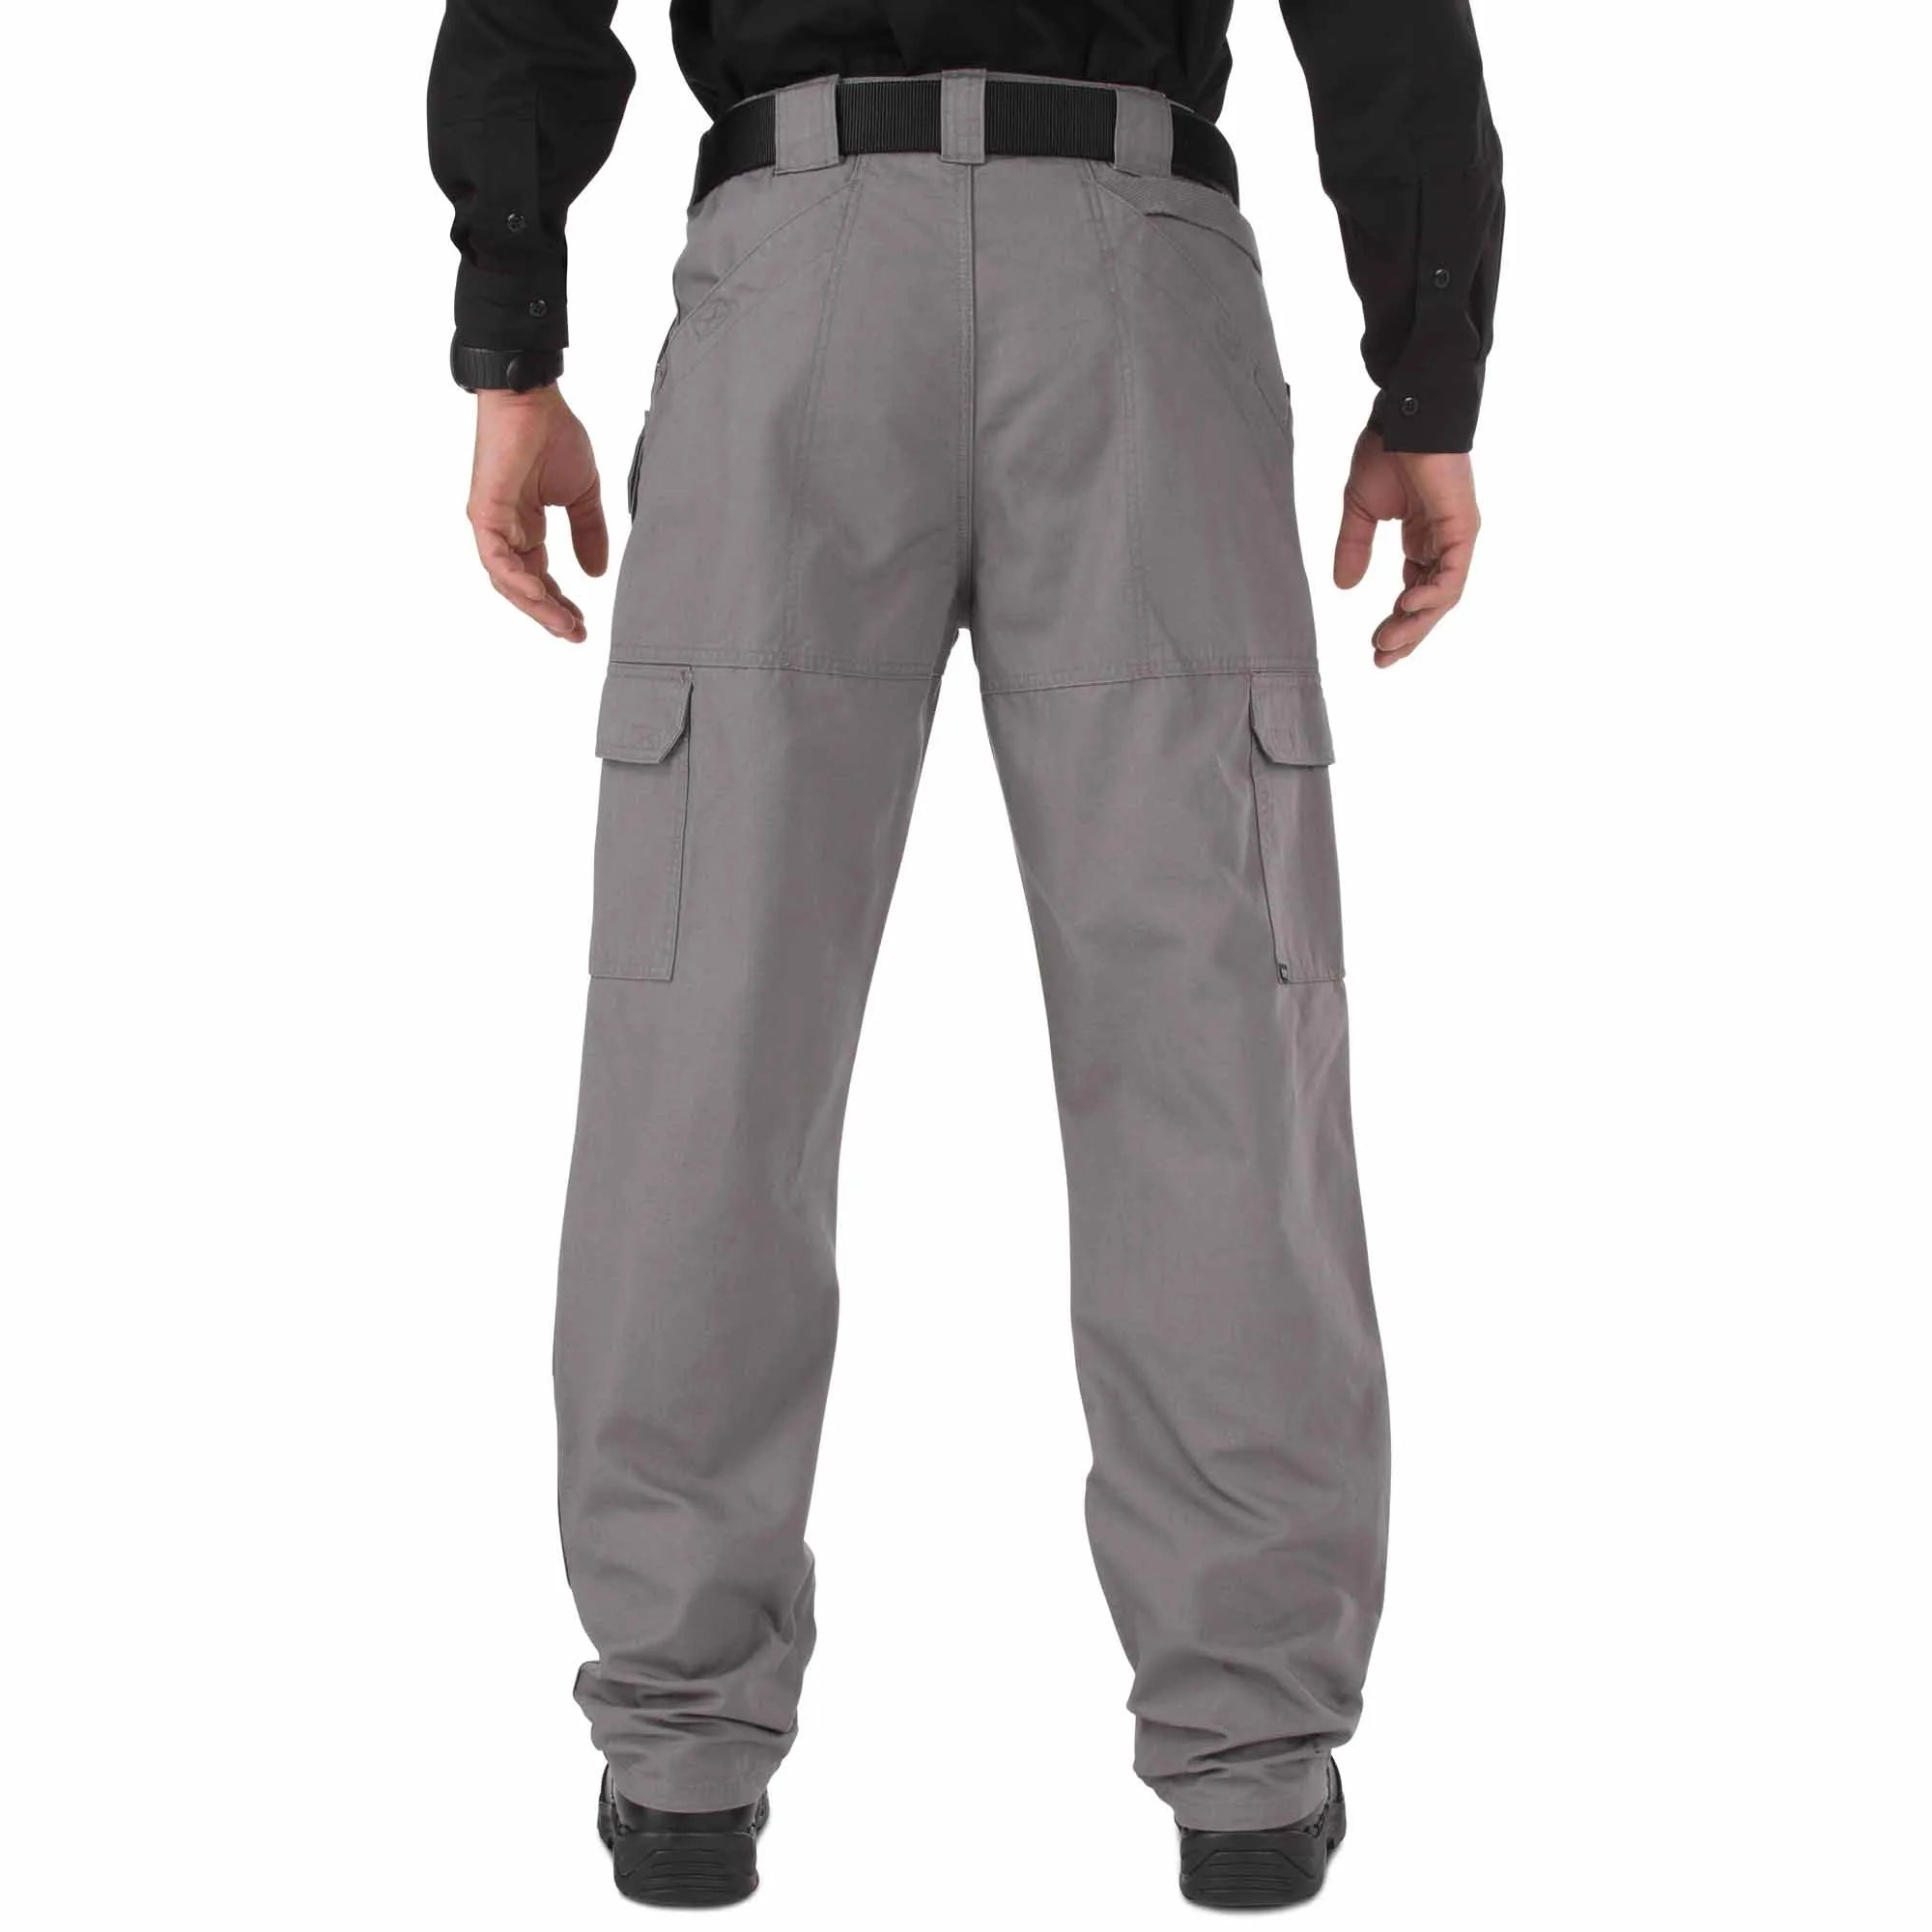 China Jinteng Long Trousers Jogger 5.11 Cargo 511 for Men Tactical Pants -  China Army Tactical Cargo Pants and Tactical Cargo Pants price |  Made-in-China.com